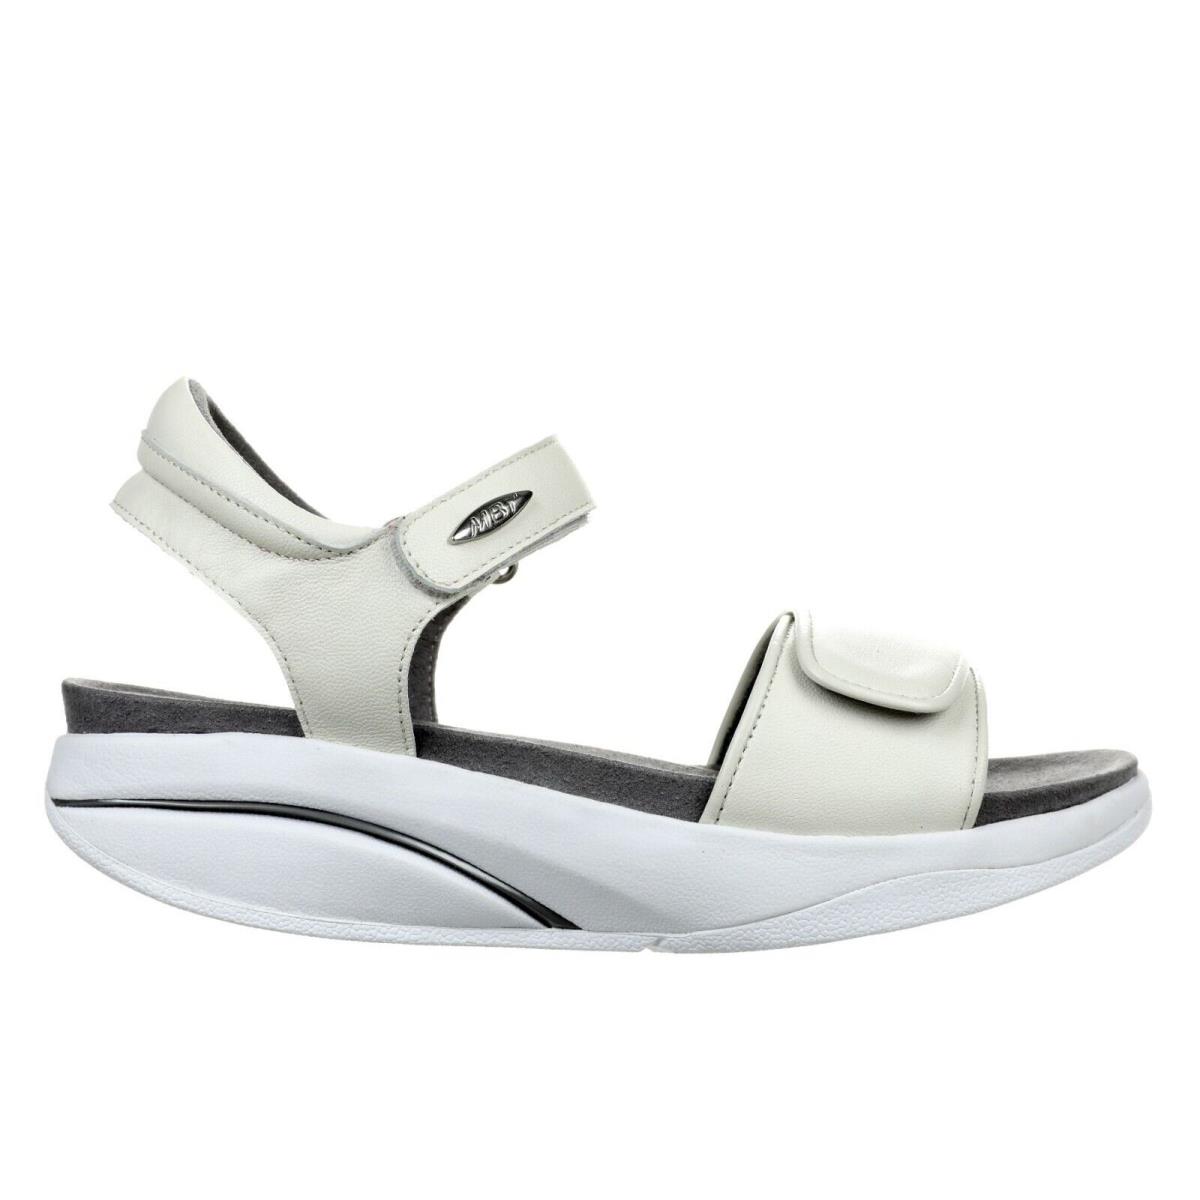 Mbt Malia Strappy White Leather Sandals- US Women`s 5-5.5 EU 36 - White